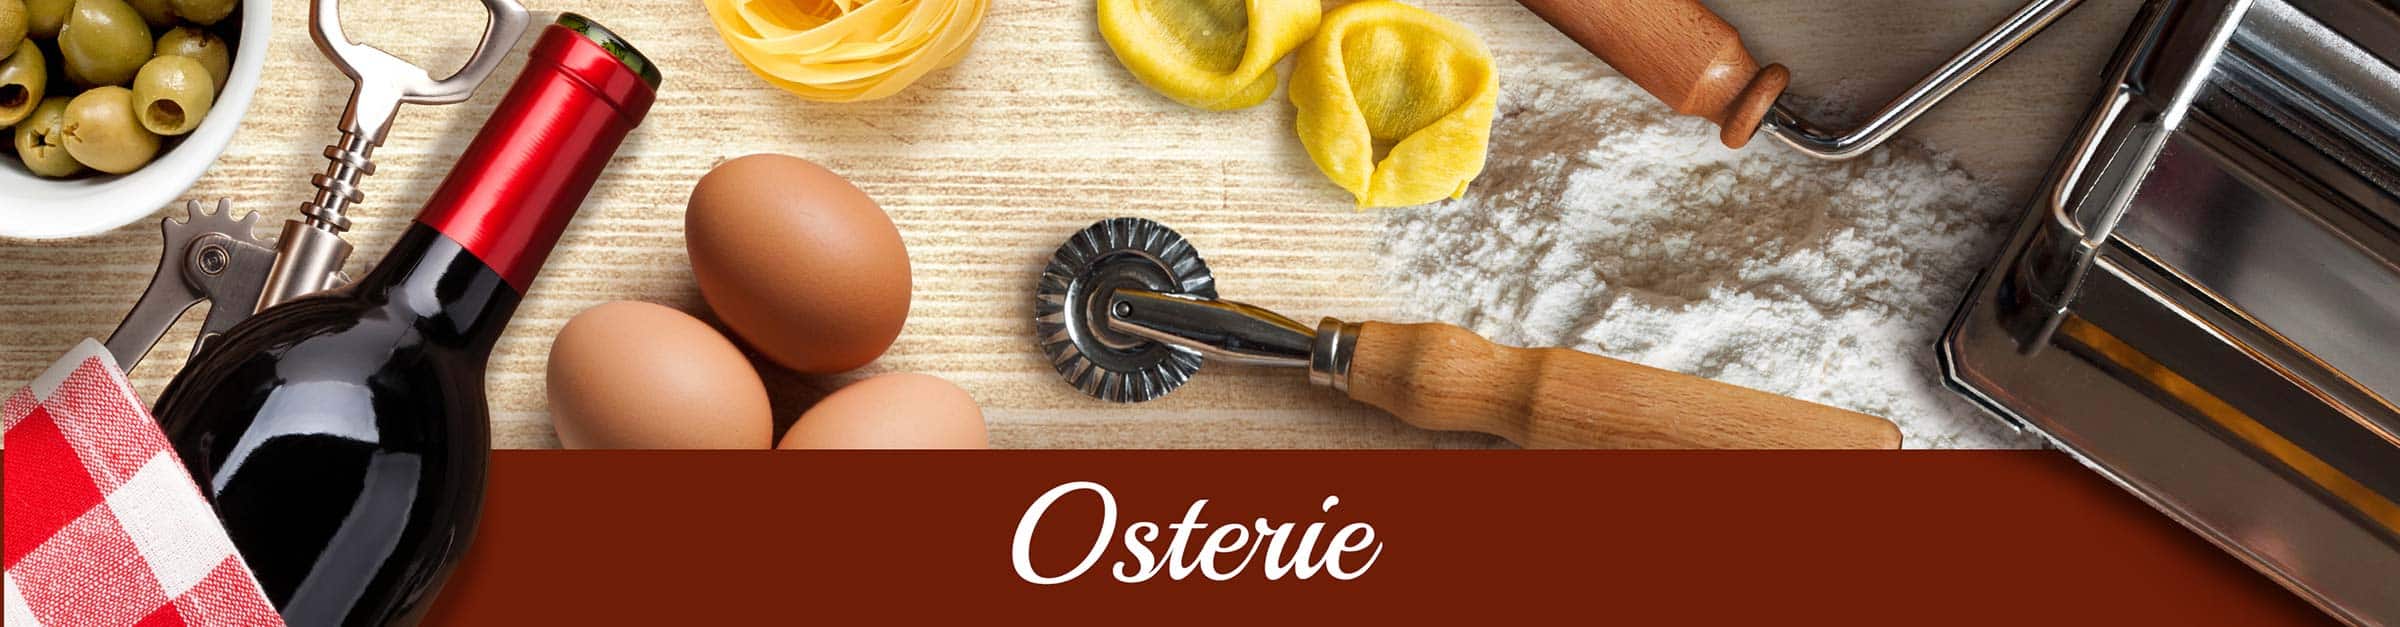 Recensioni Osterie - Simon Italian Food